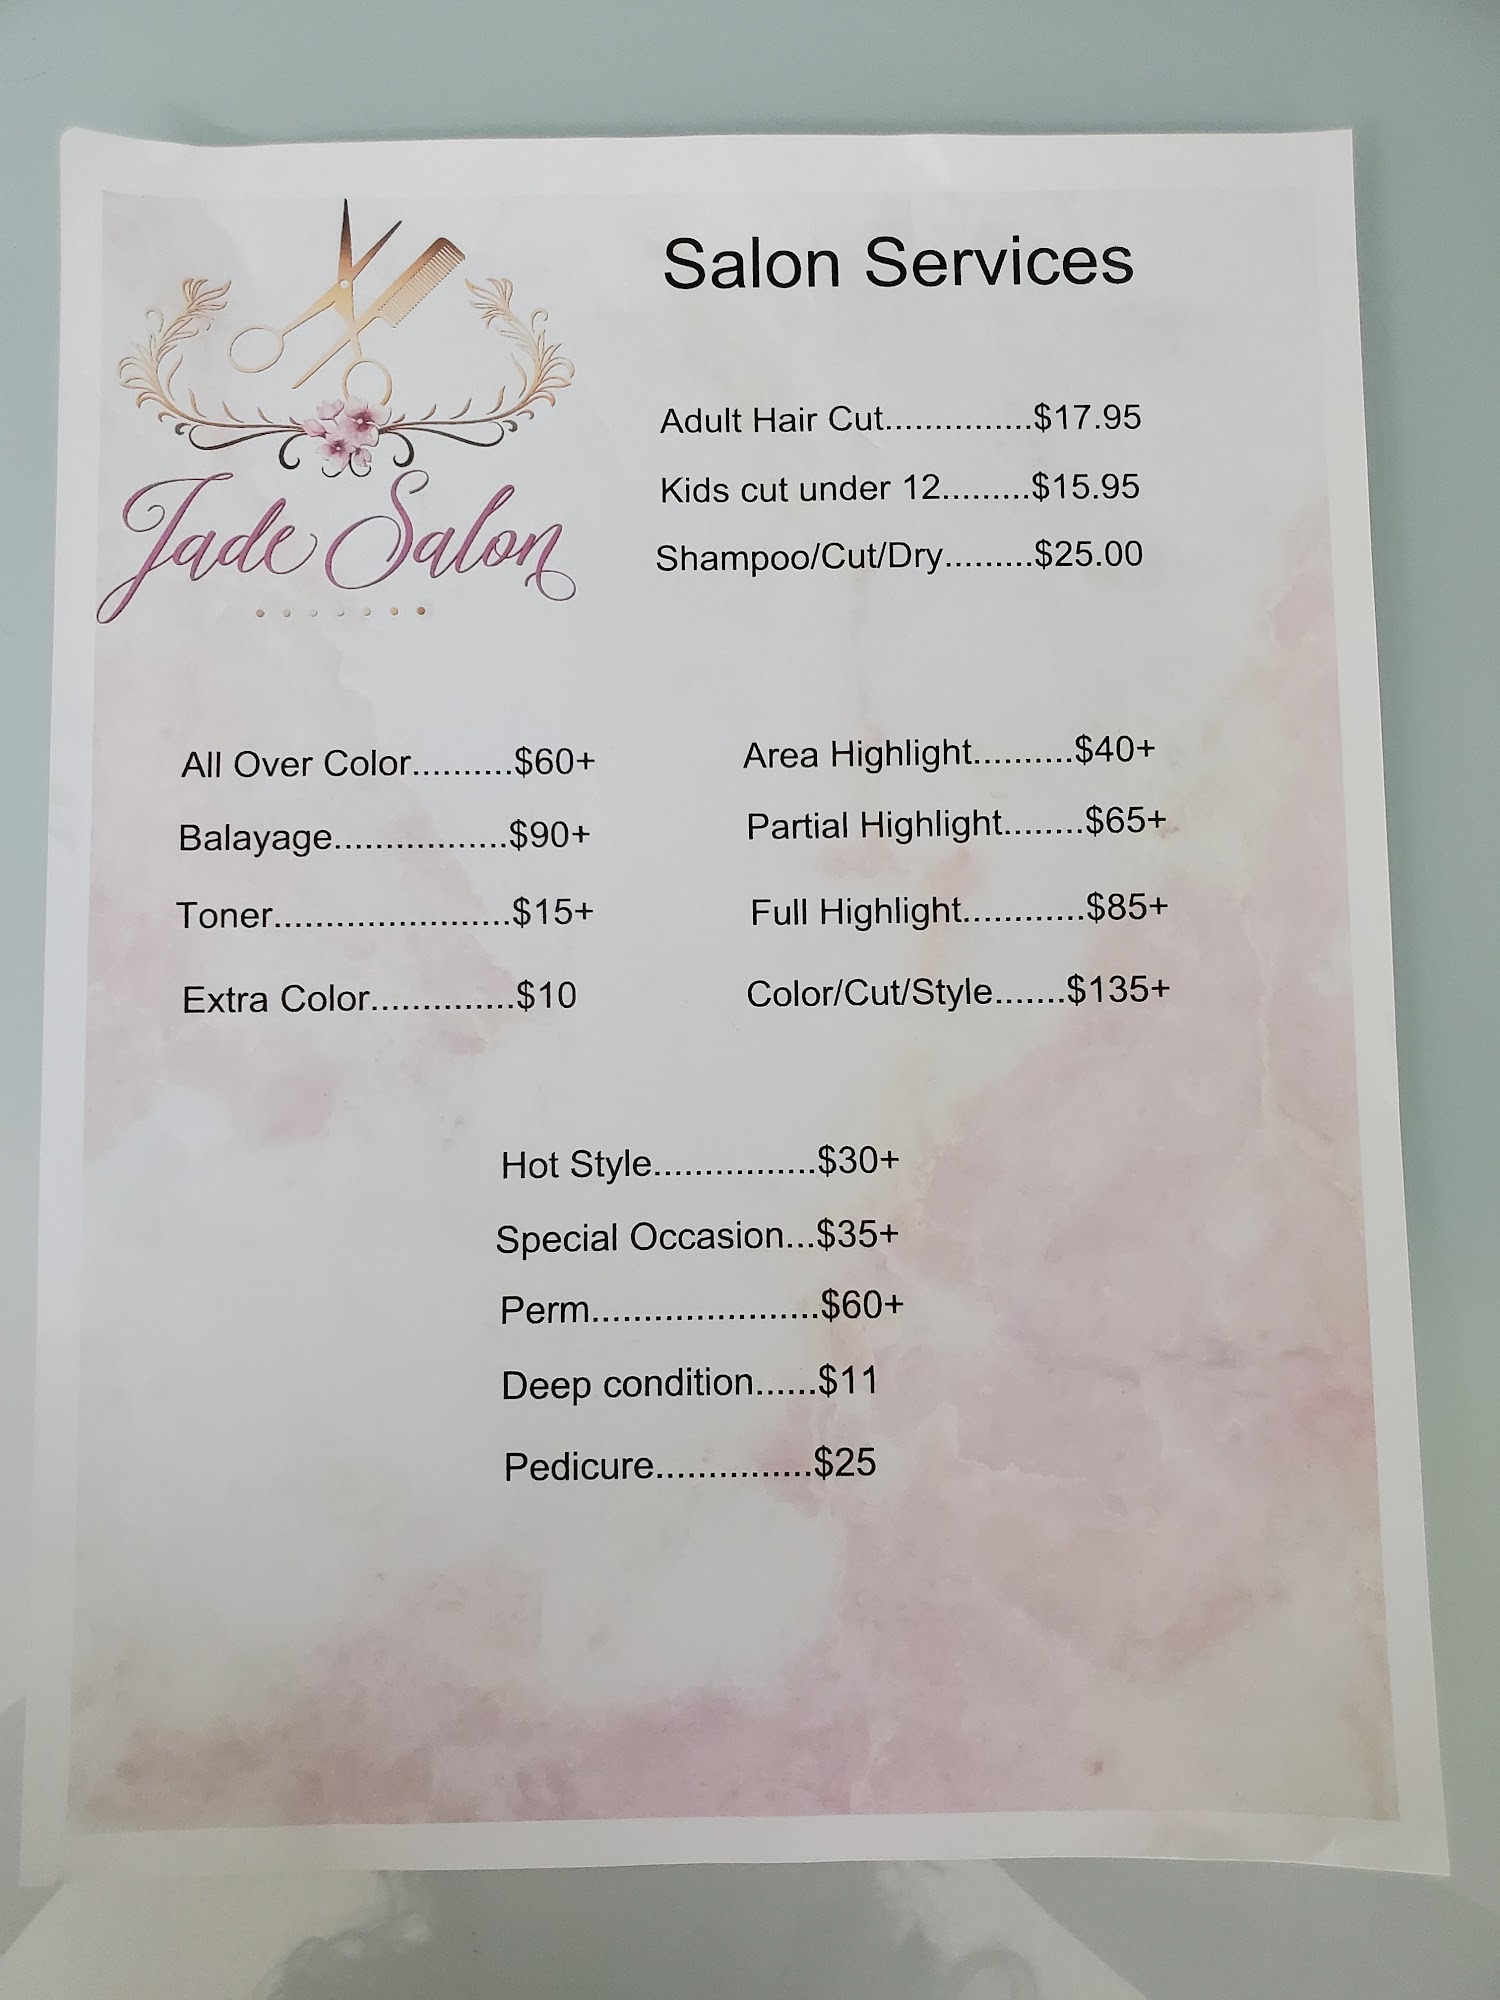 Jade Salon 6002 State Rd B, Hillsboro Missouri 63050